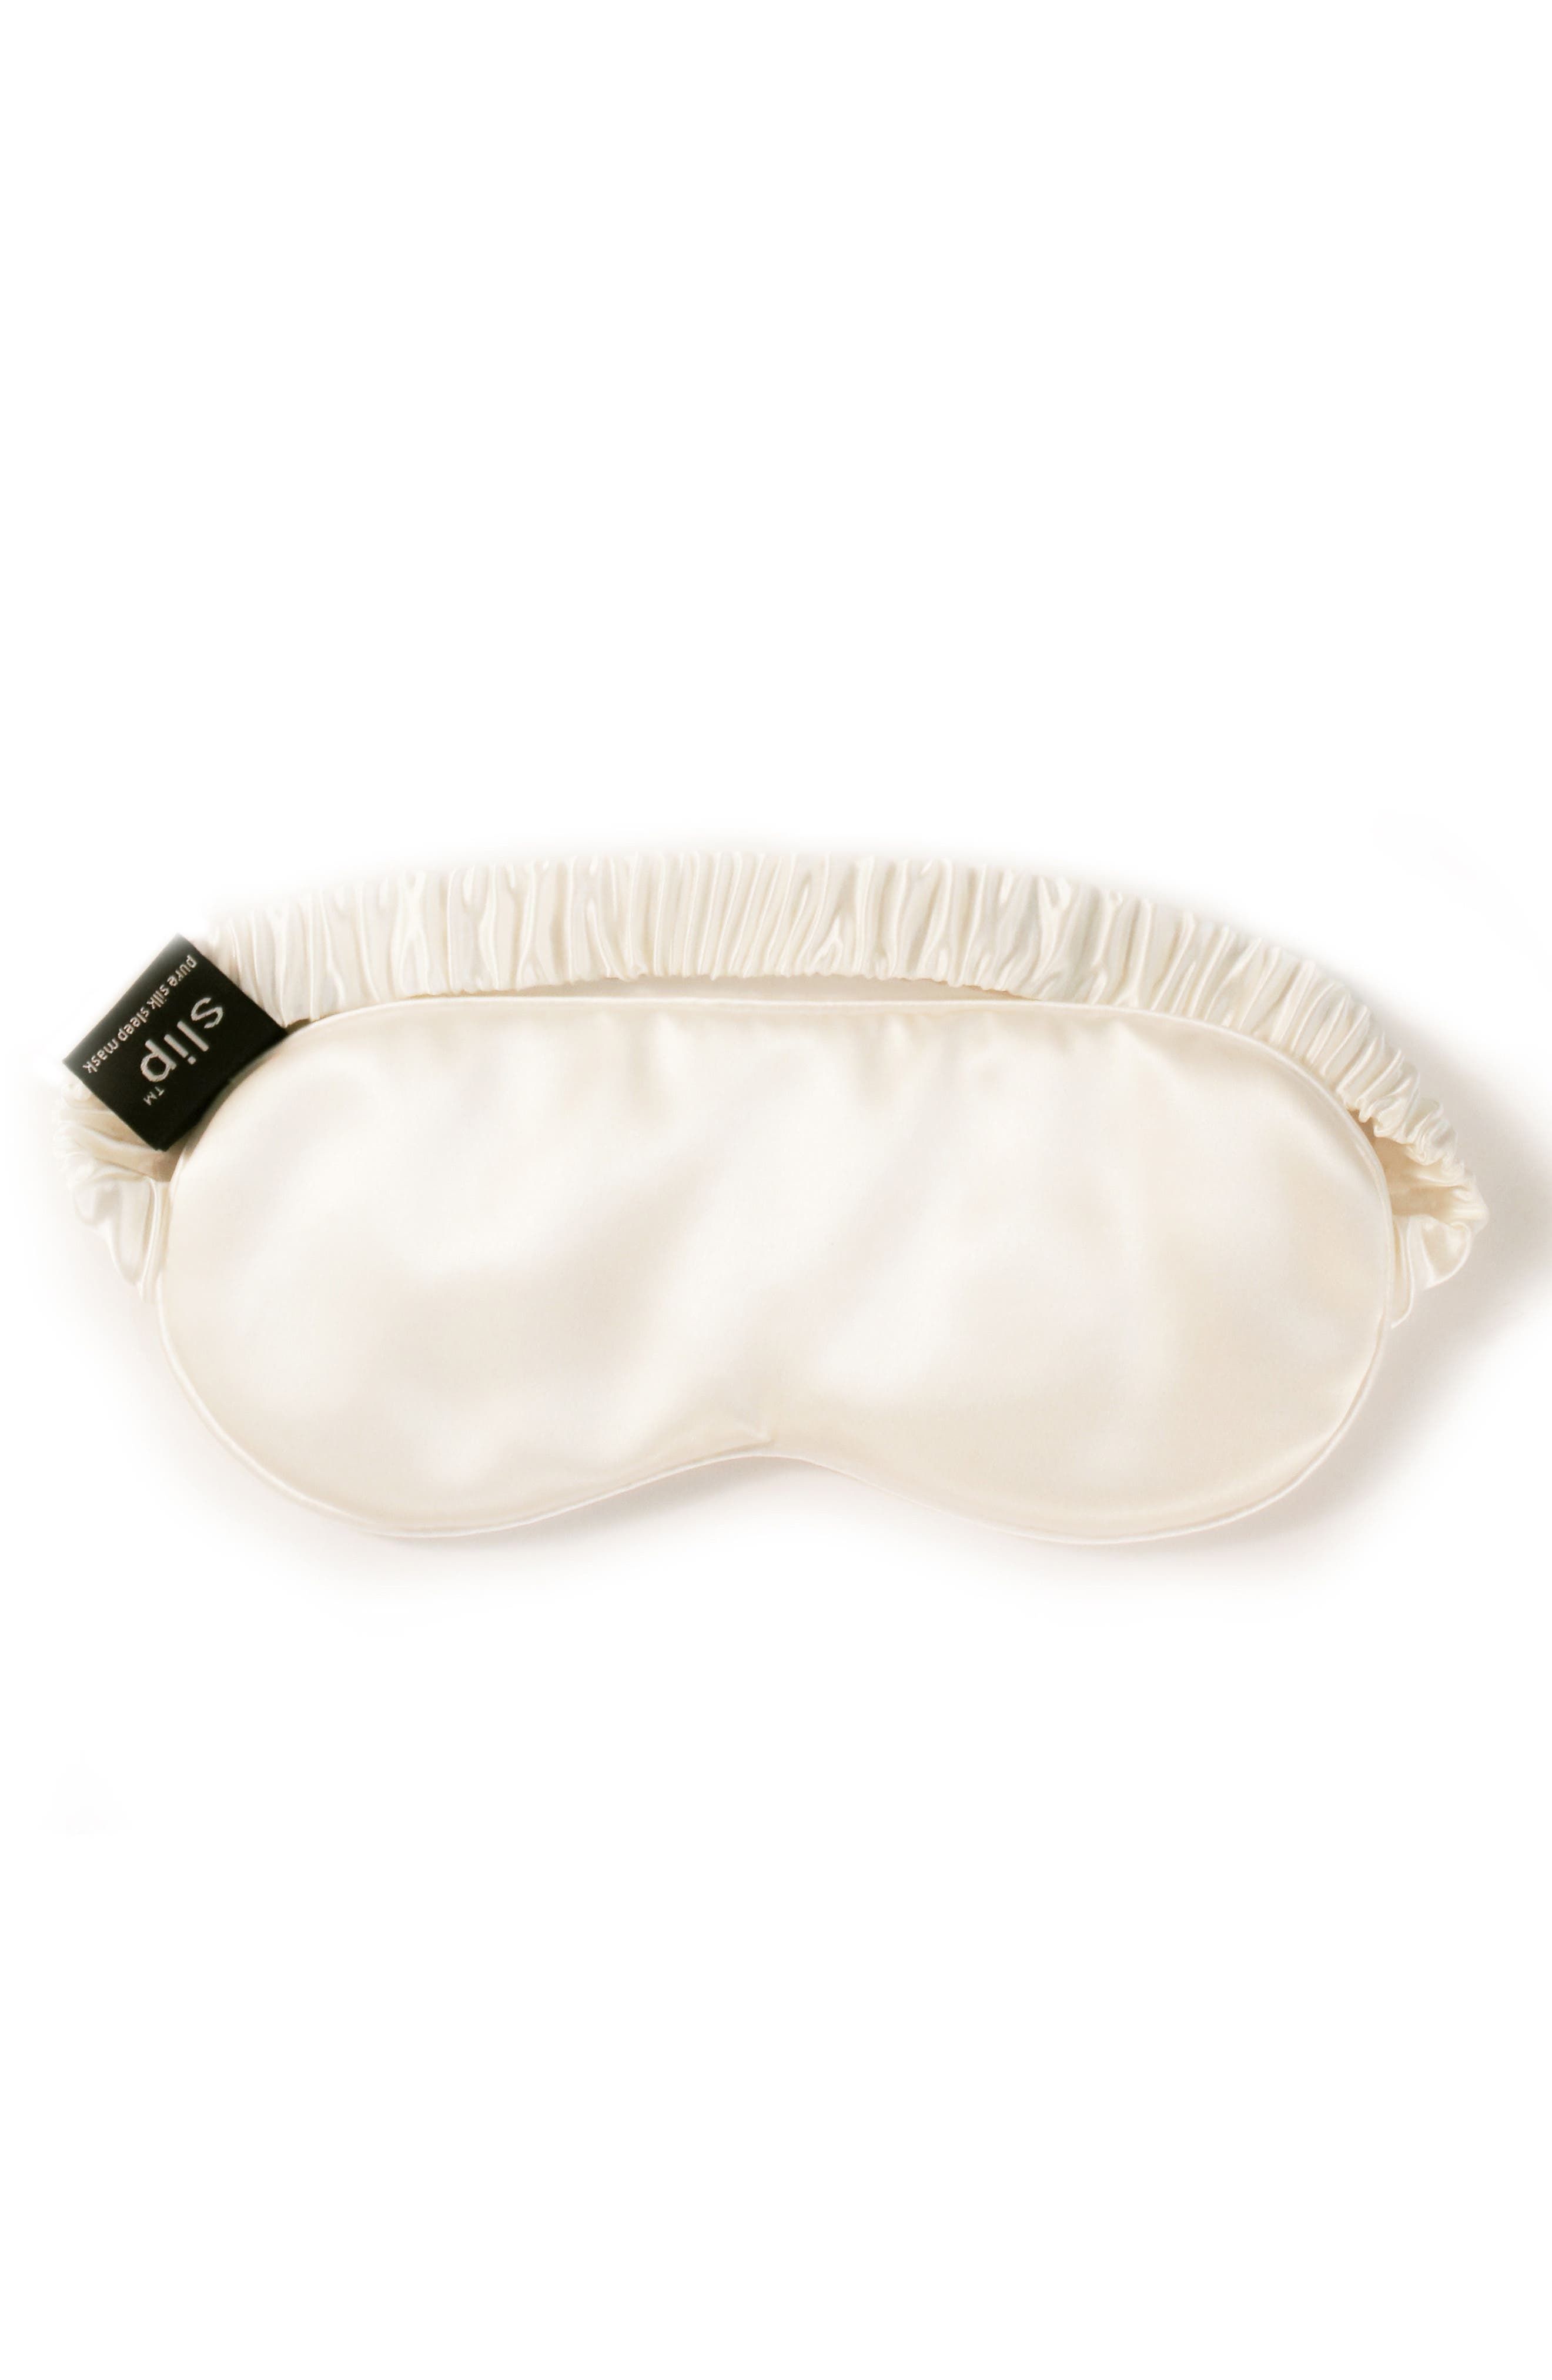 slip Pure Silk Sleep Mask in White at Nordstrom